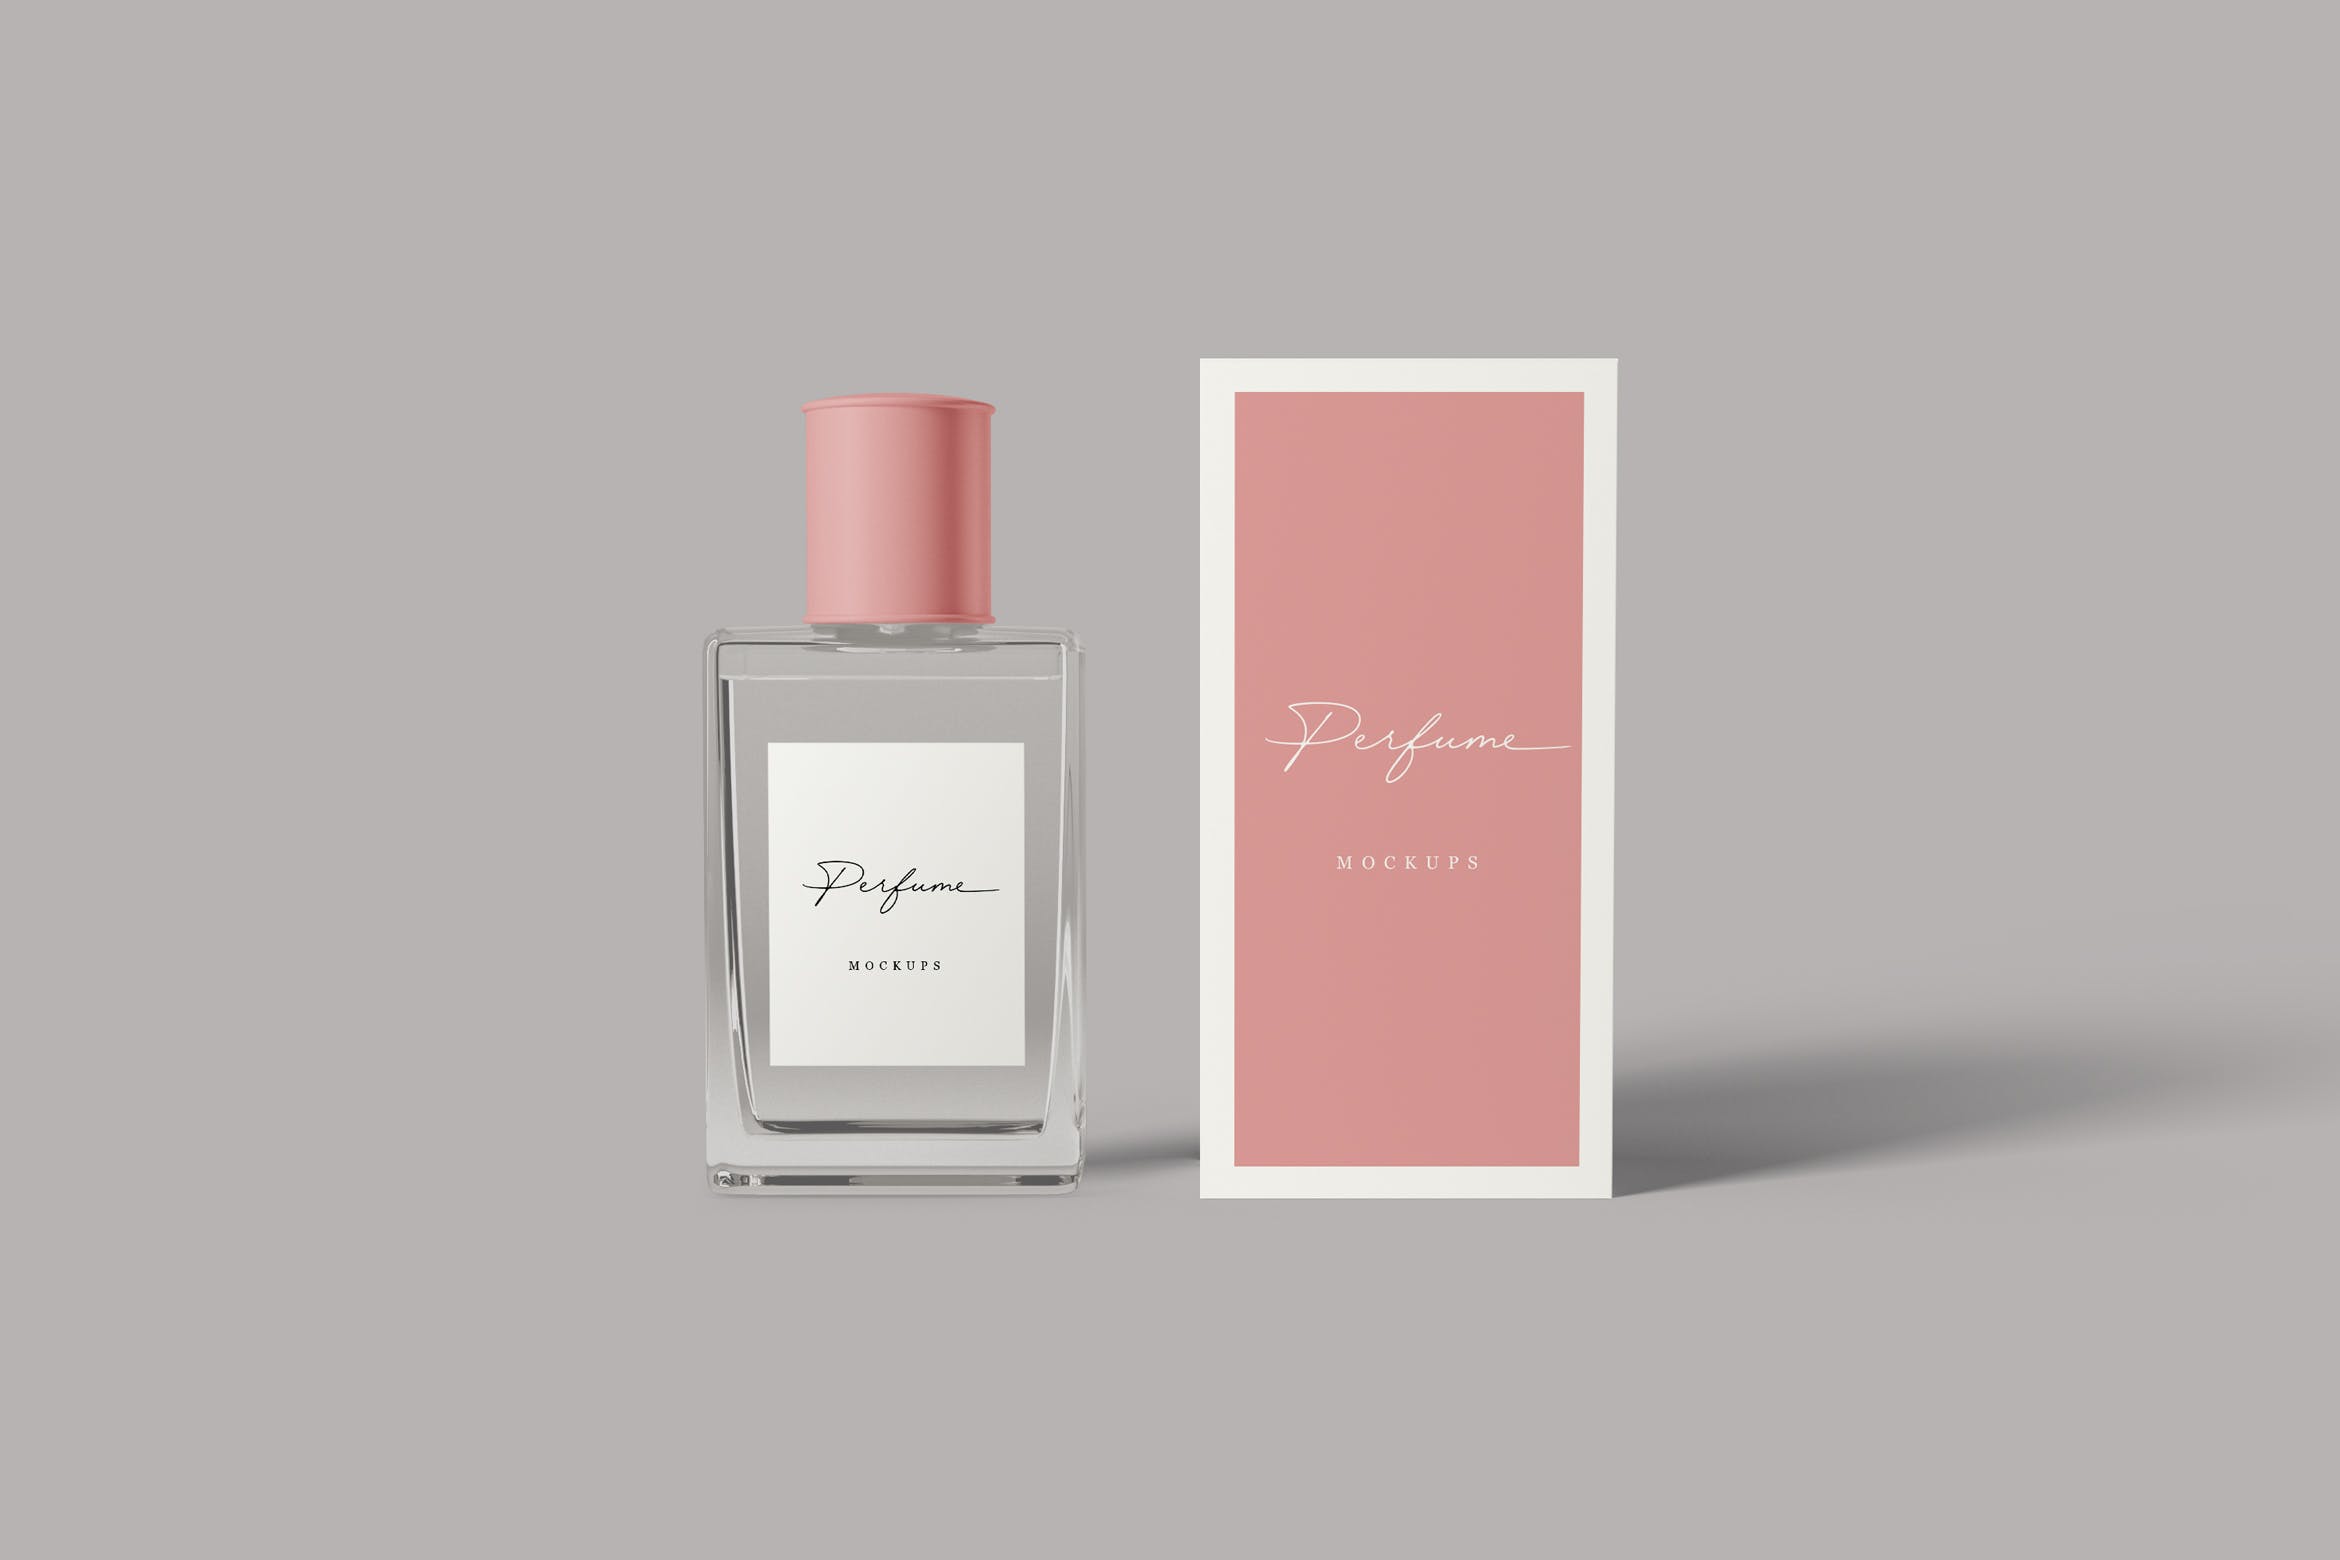 香水瓶外观设计图16图库精选 Perfume Mockups插图